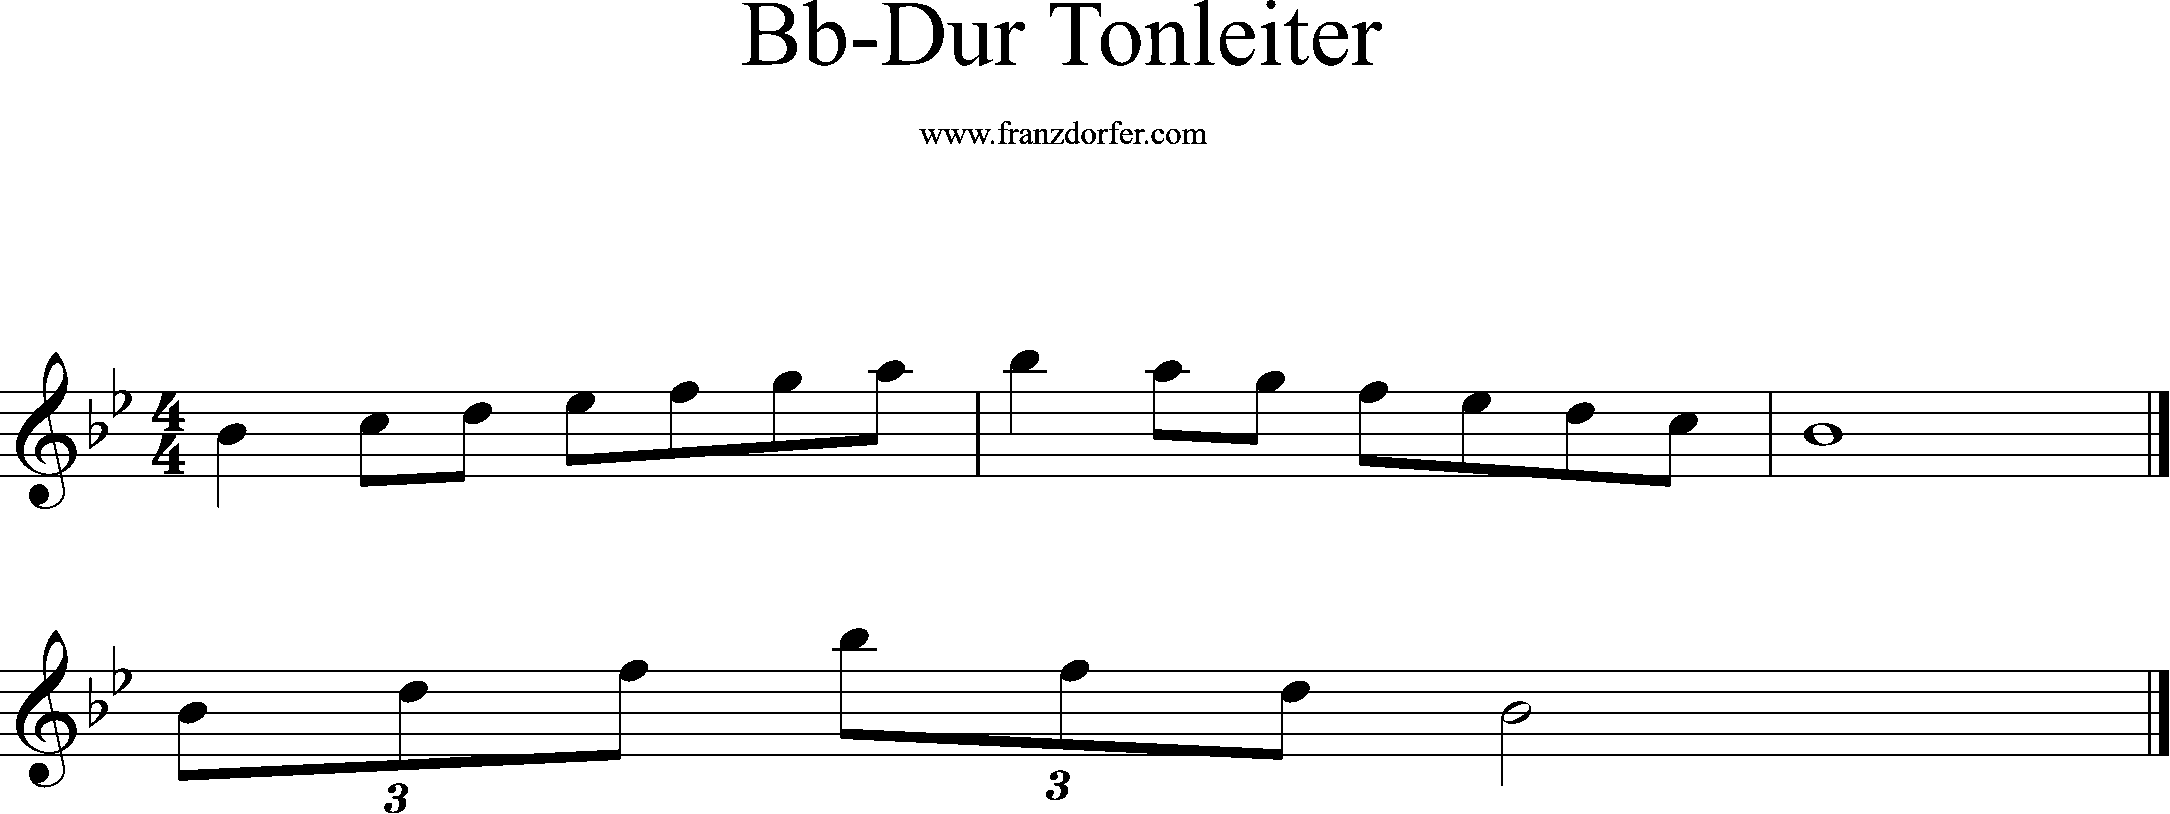 bb-Dur tonleiter, bb1-bb2